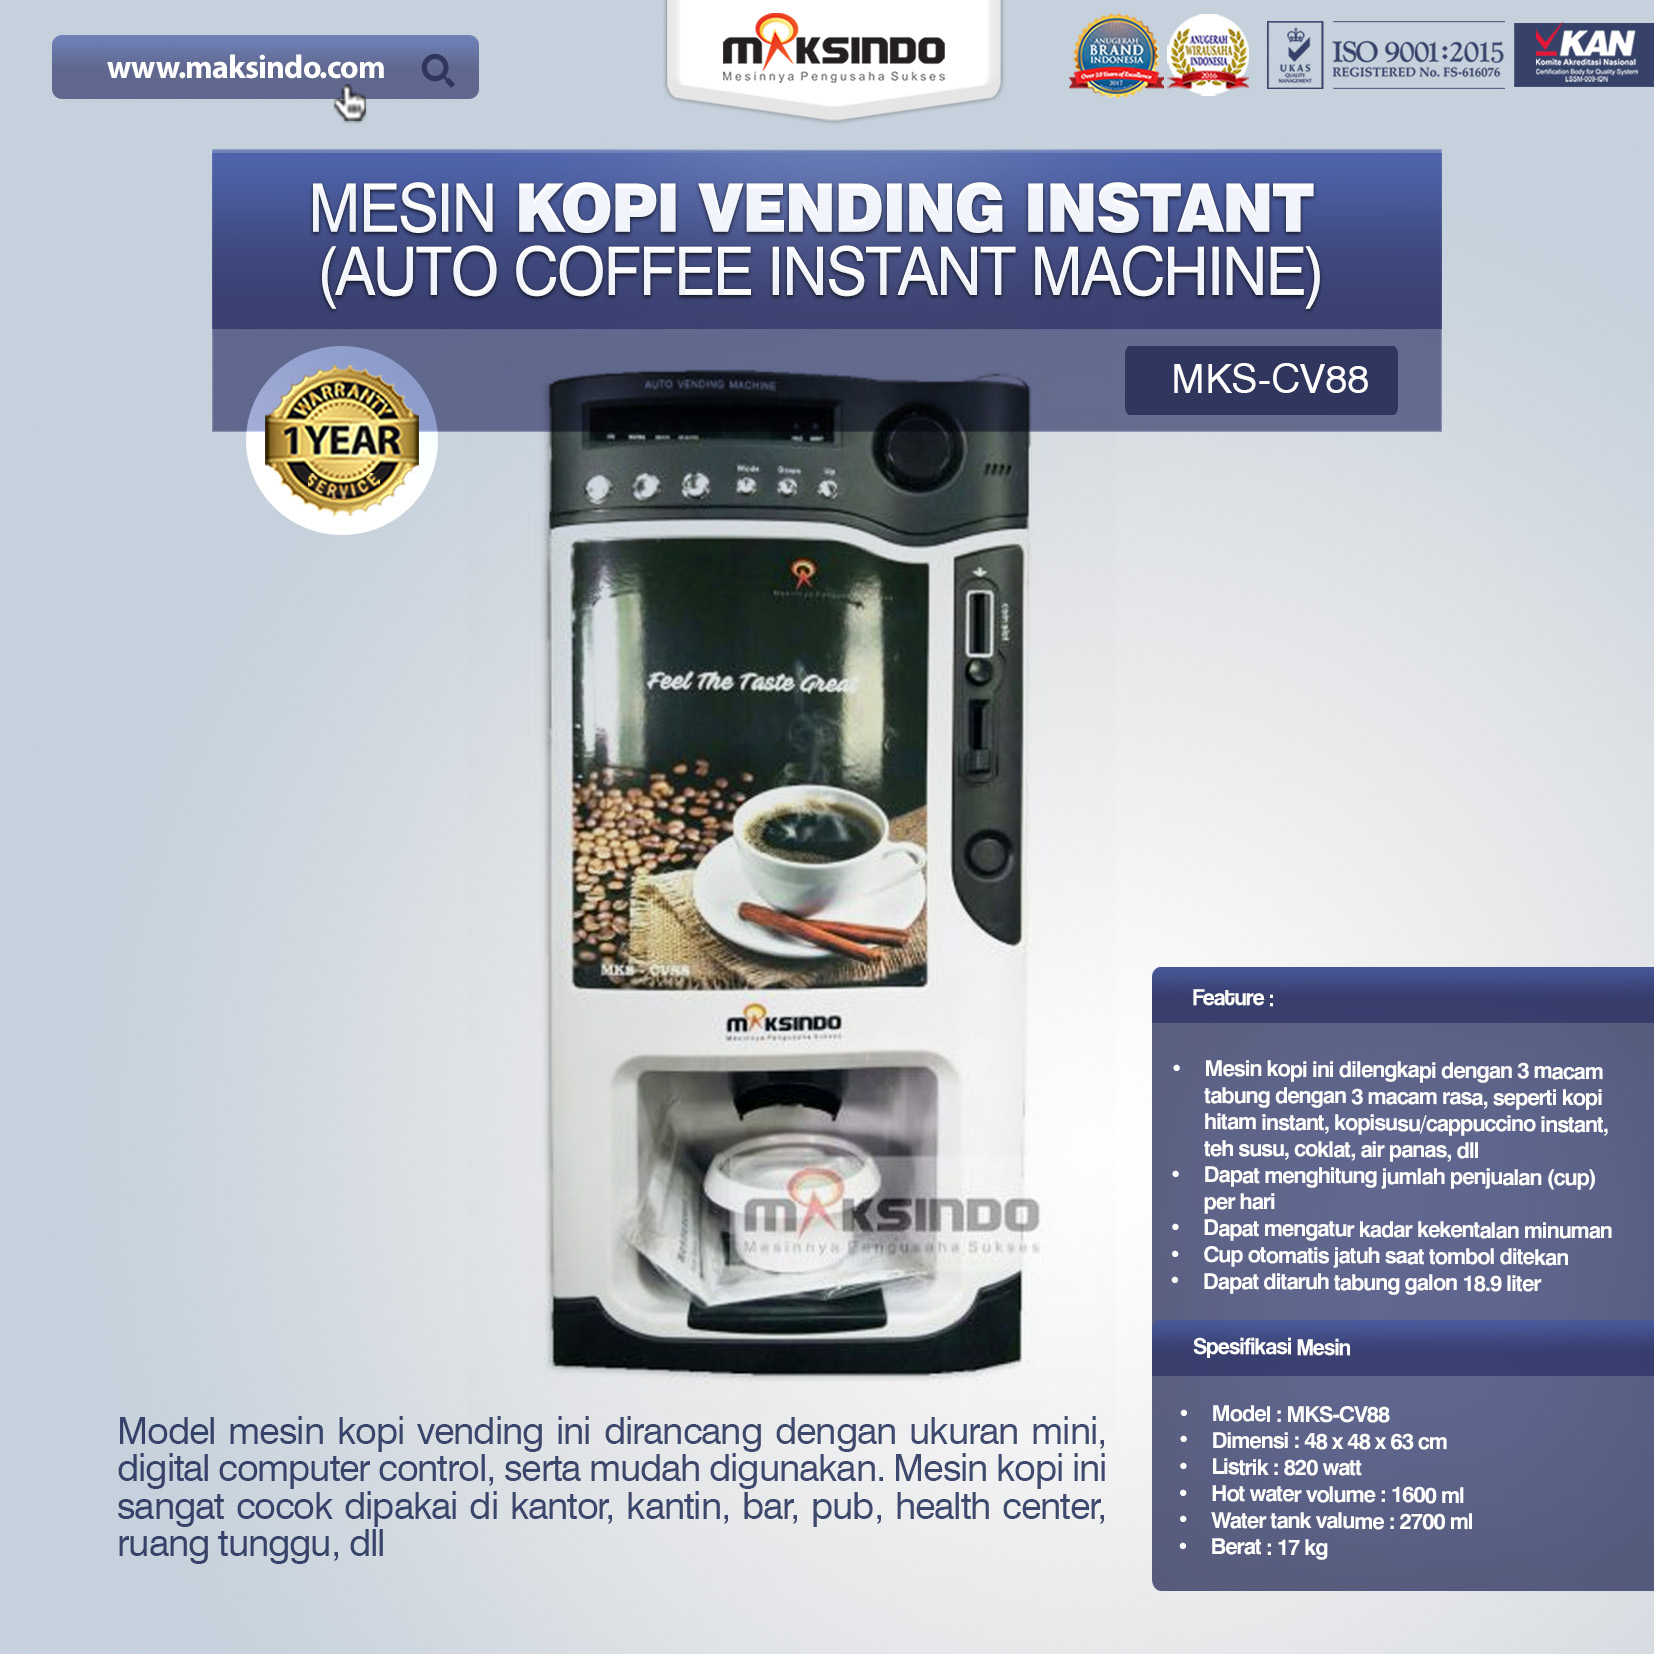 Jual Mesin Kopi Instant (Auto Coffee Instant Machine) MKS-CV88 di Yogyakarta